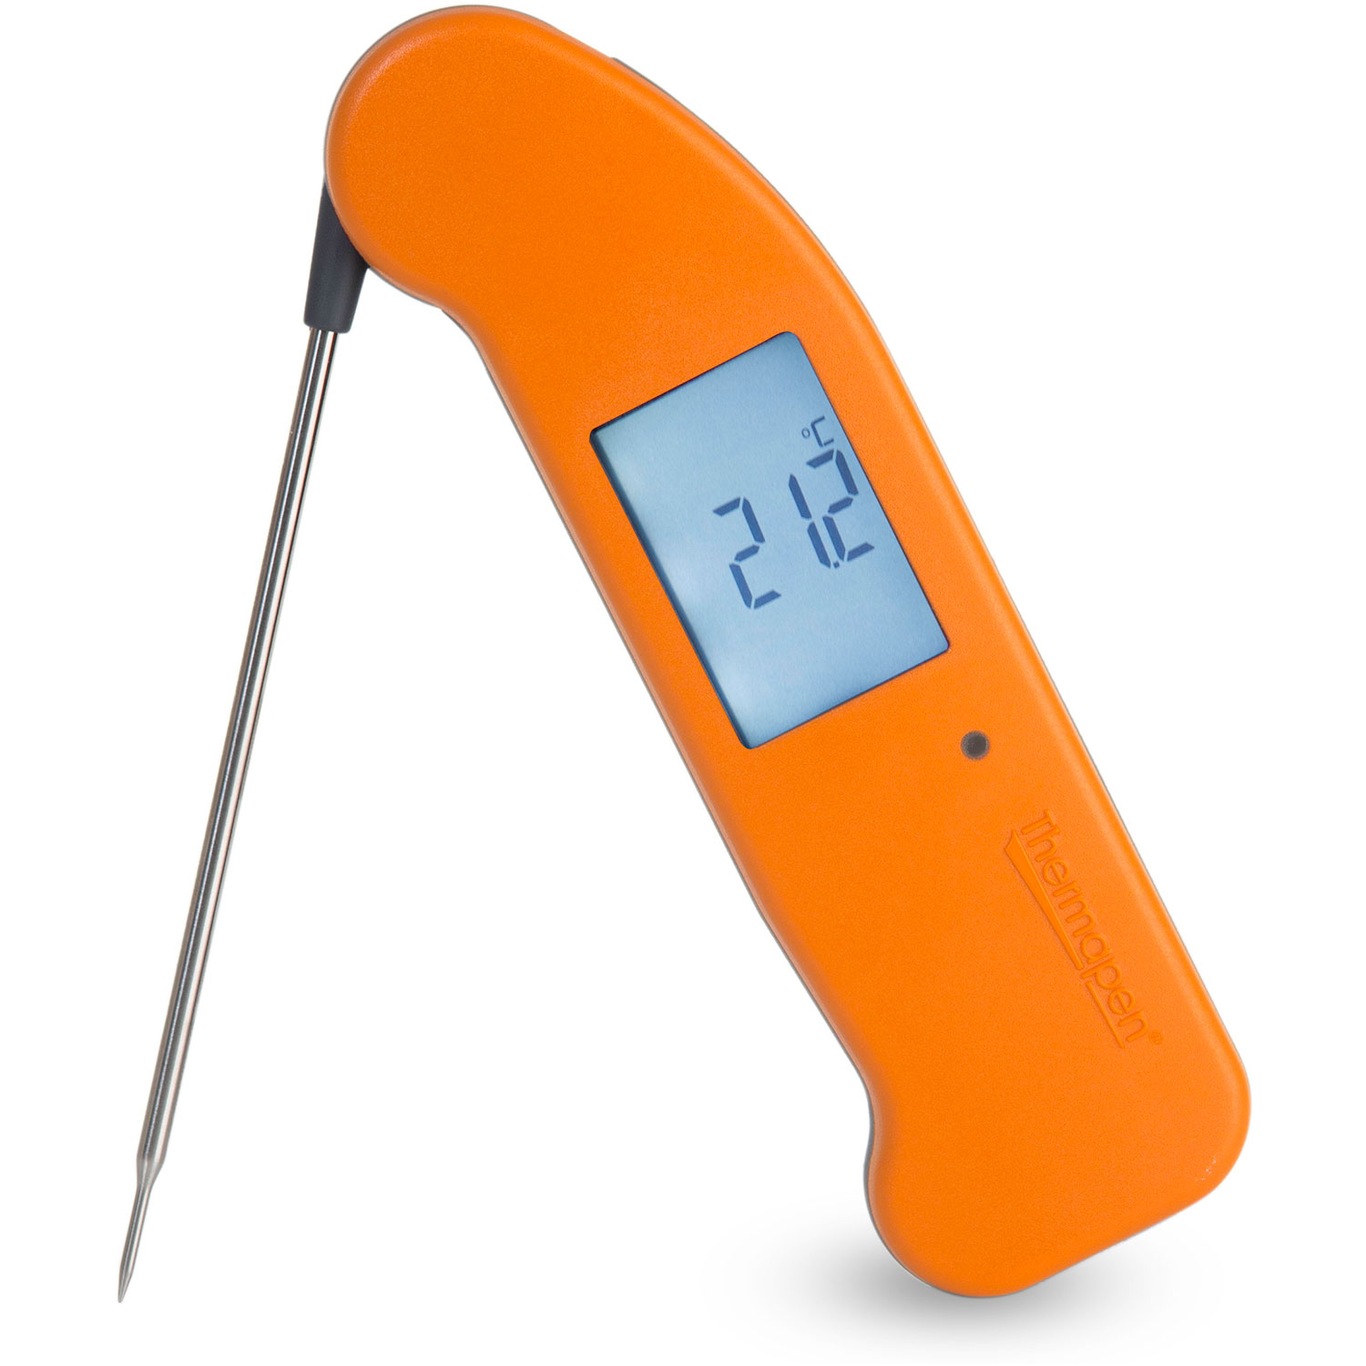 Thermapen One Termometer, Orange